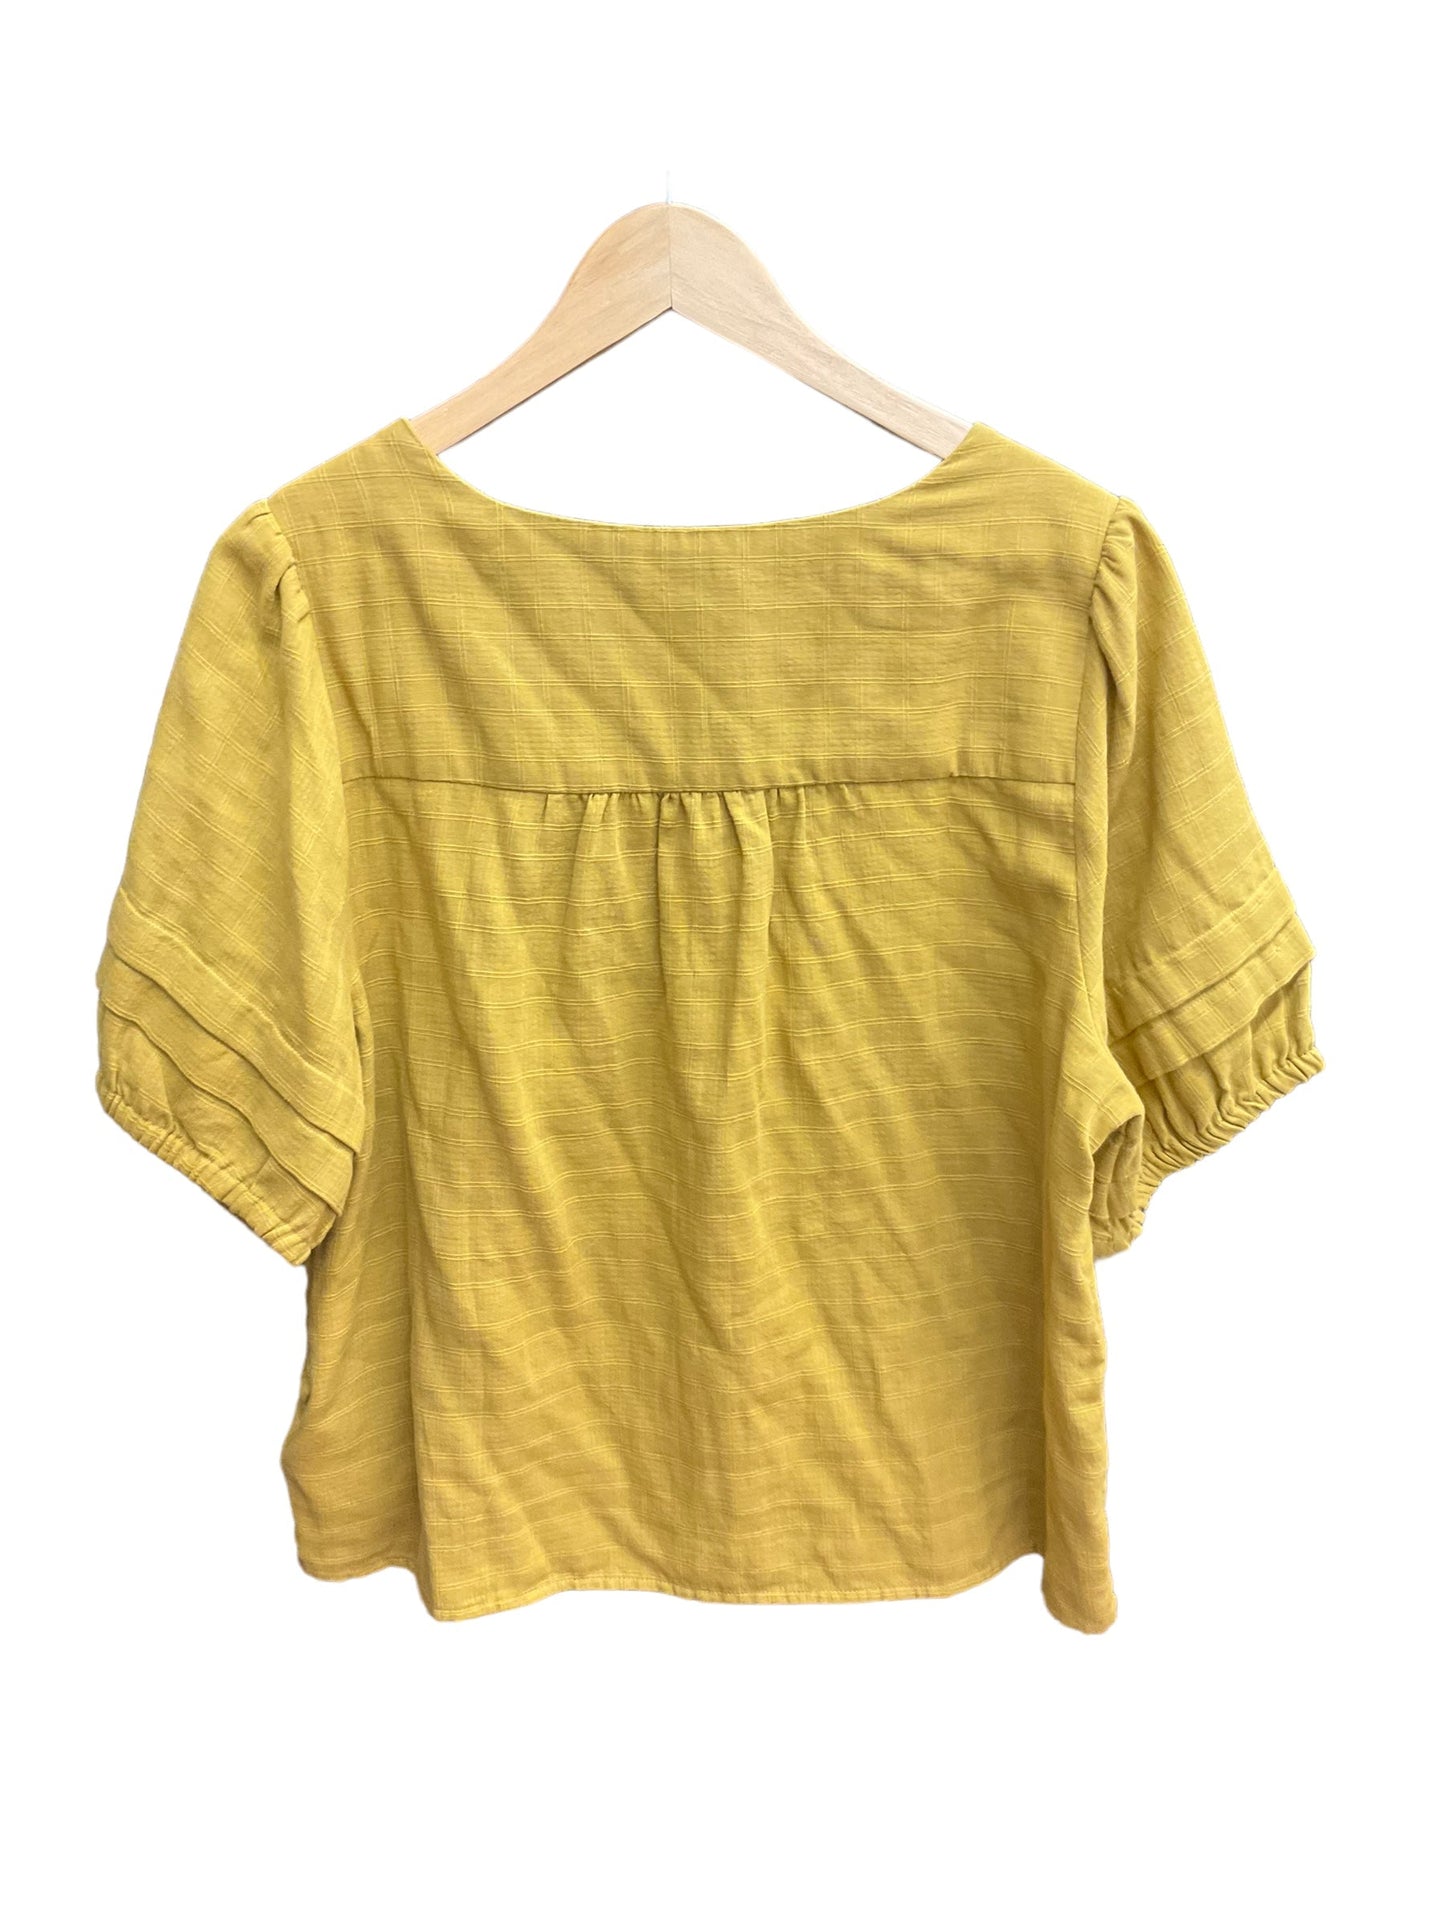 Yellow Blouse Short Sleeve Madewell, Size Xl